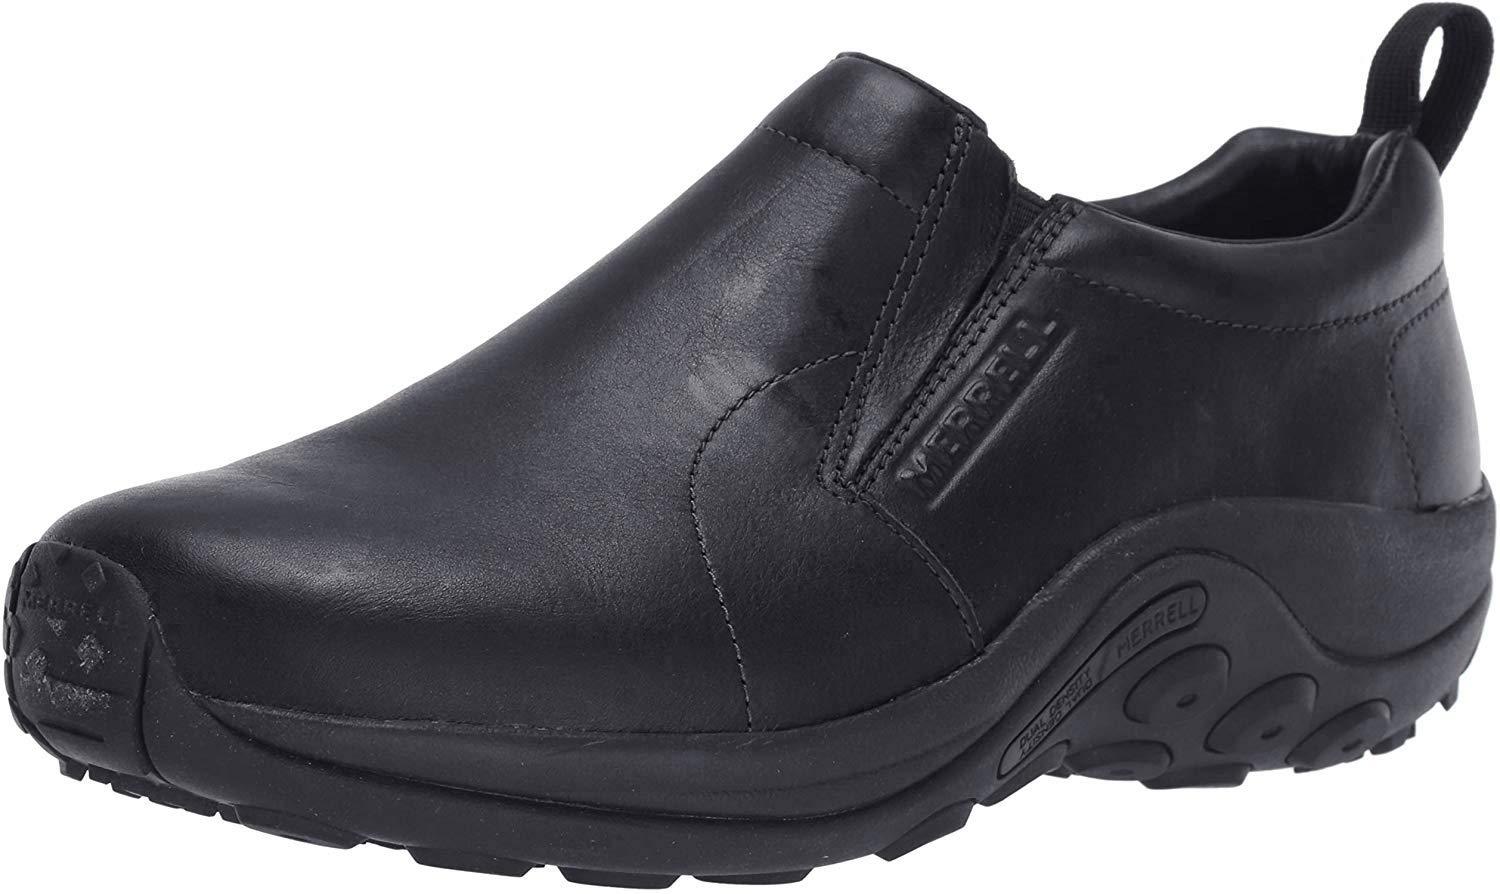 Merrell Jungle Moc Leather 2 Shoe in Black Leather (Black) for Men ...